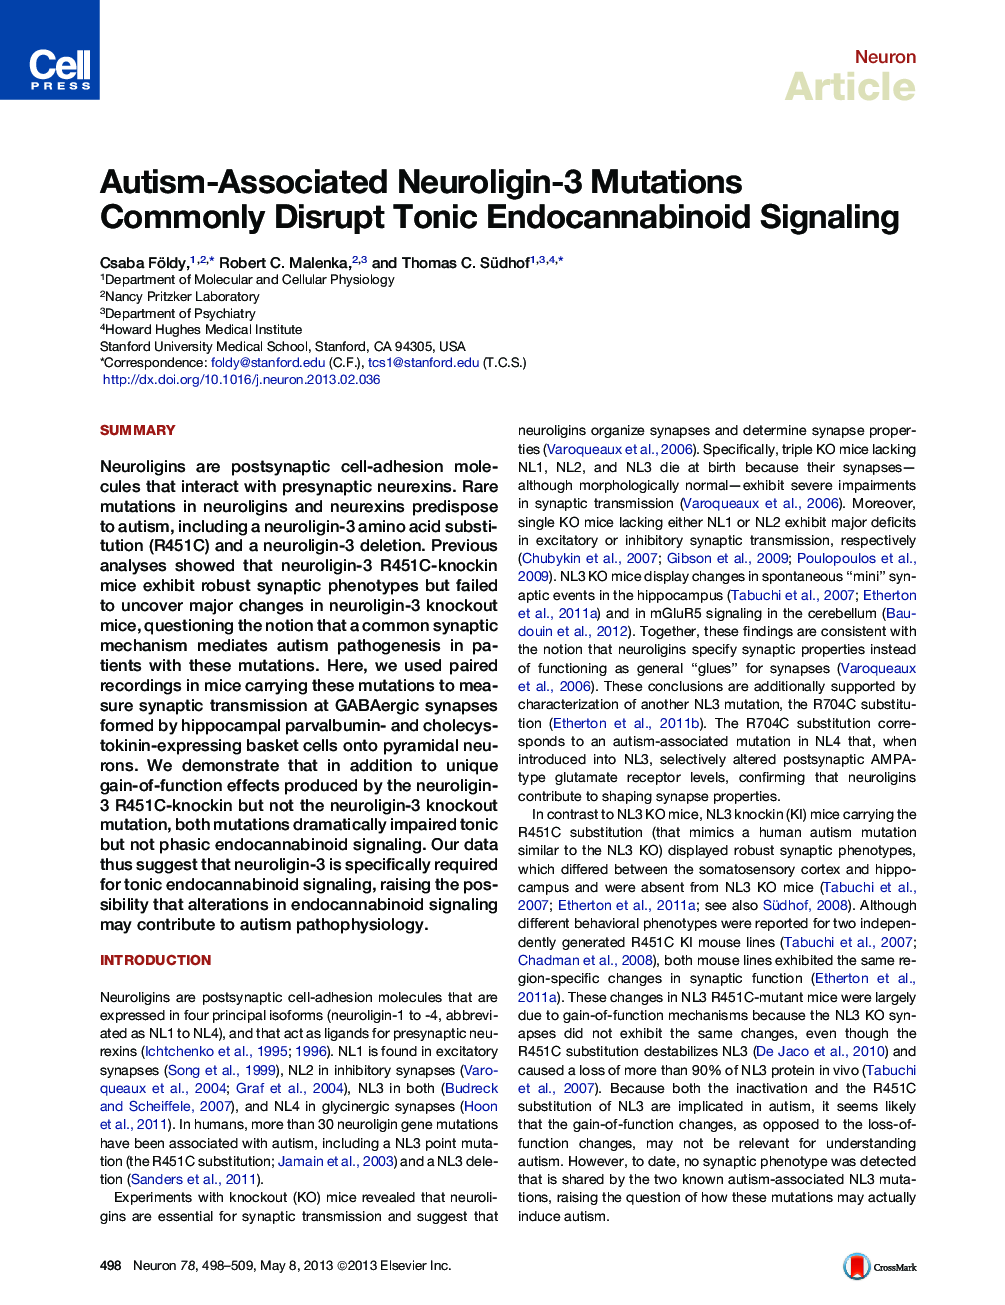 Autism-Associated Neuroligin-3 Mutations Commonly Disrupt Tonic Endocannabinoid Signaling